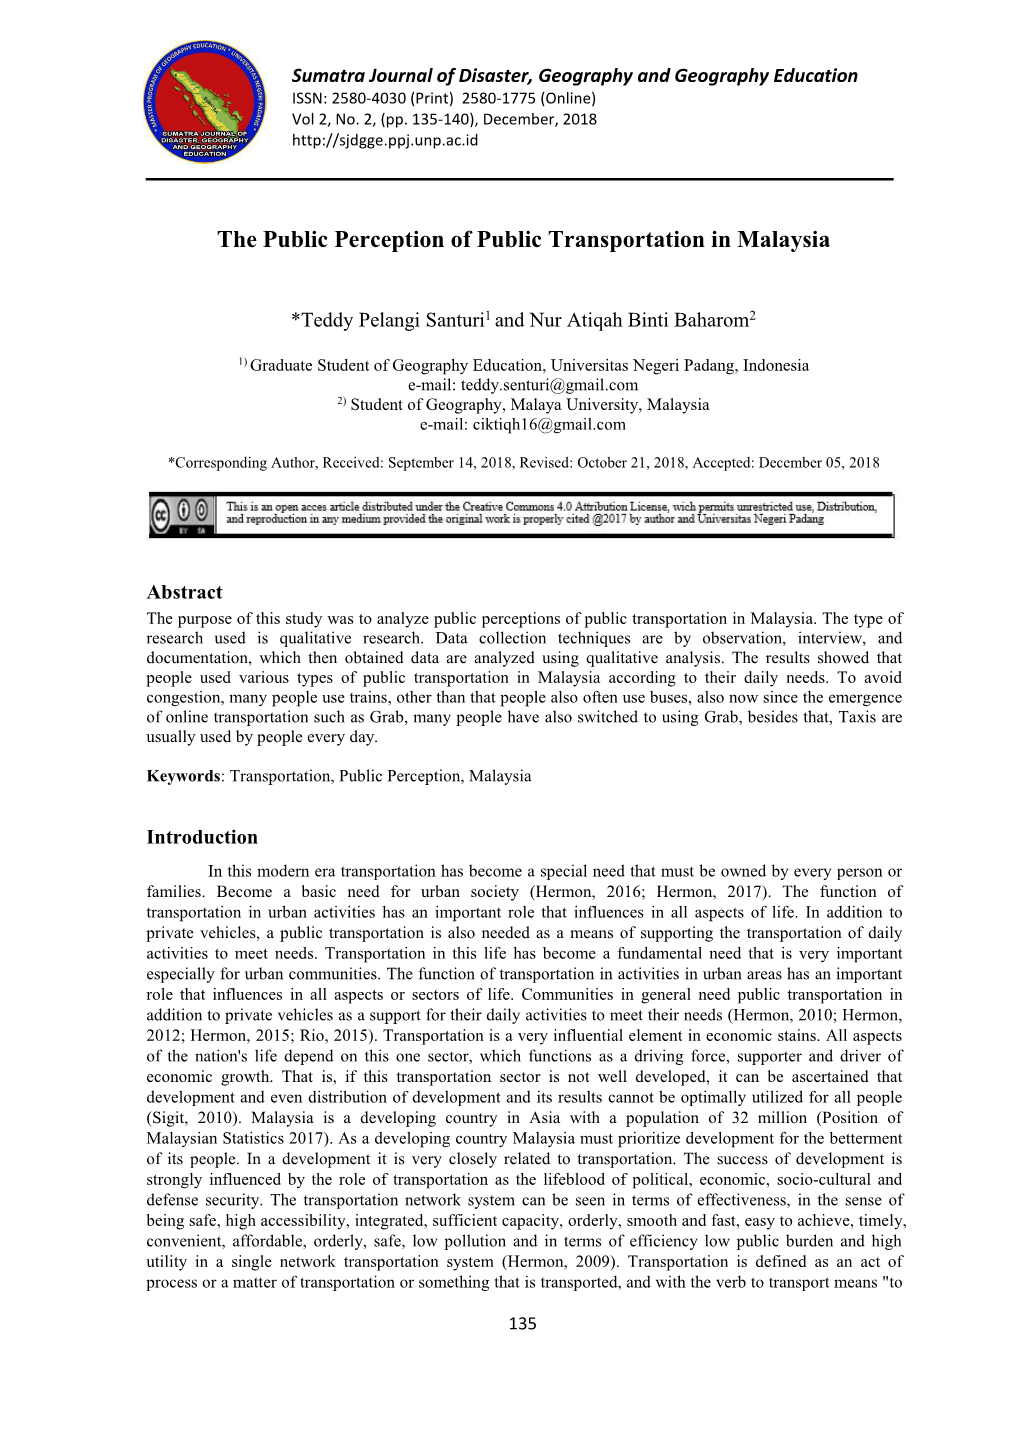 The Public Perception of Public Transportation in Malaysia